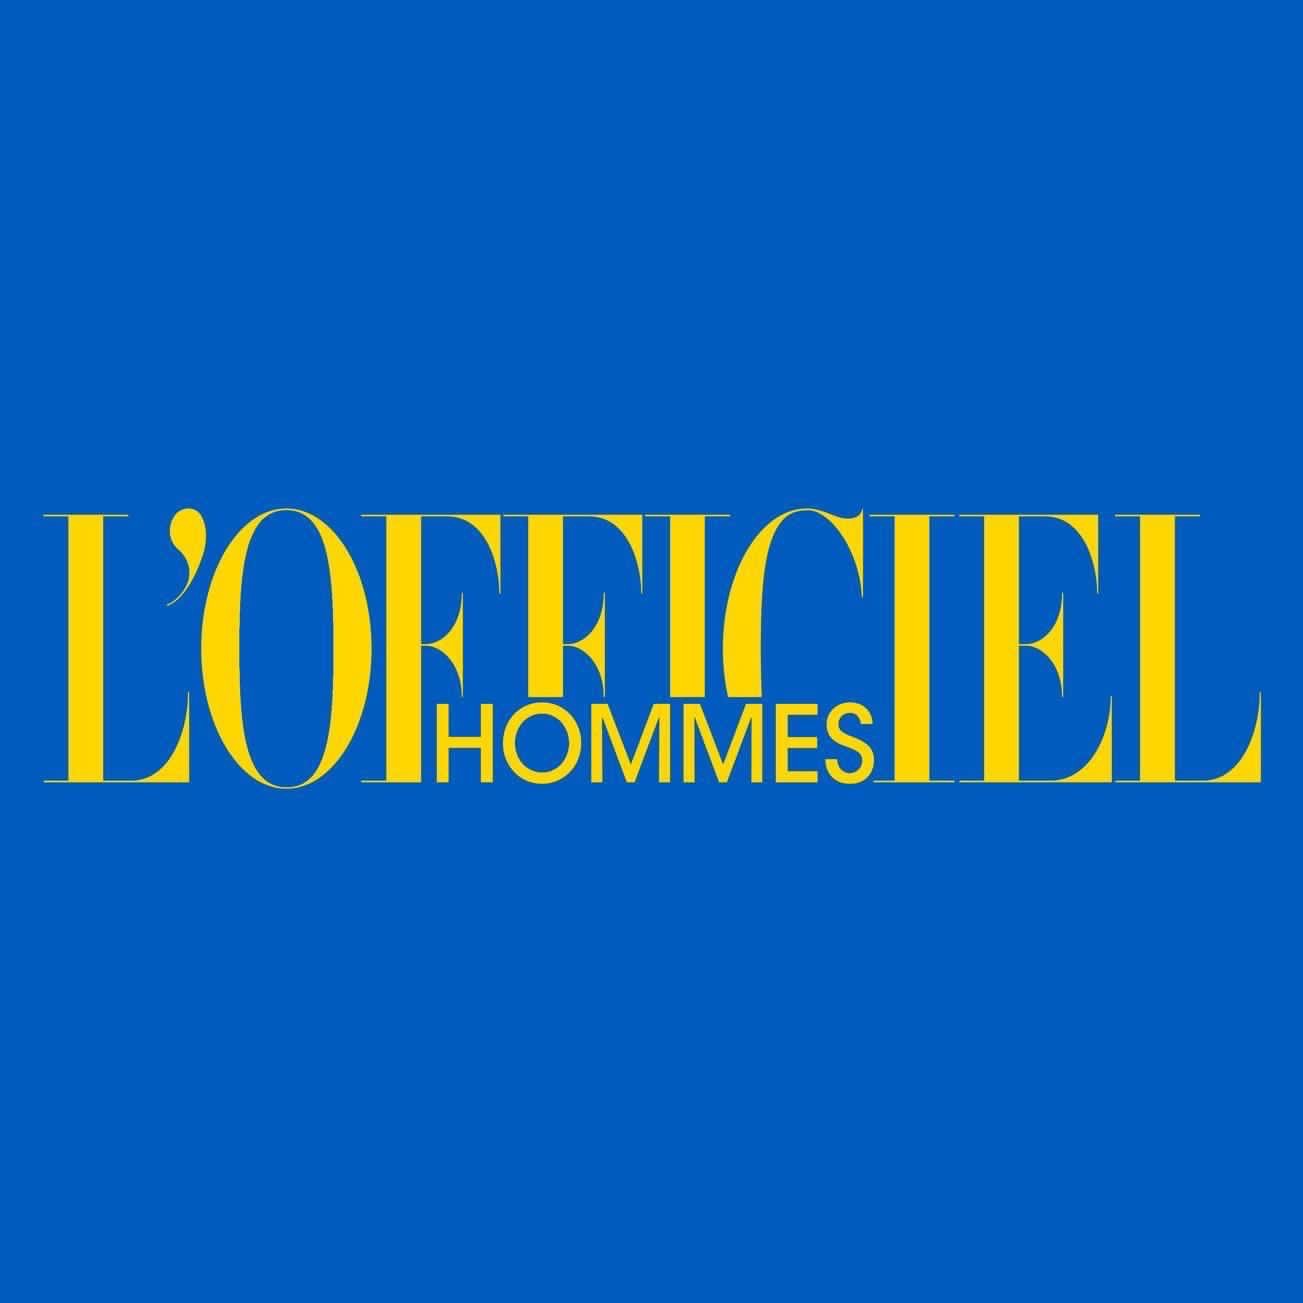 LOFFICIEL_HOMMES_UKRAINE